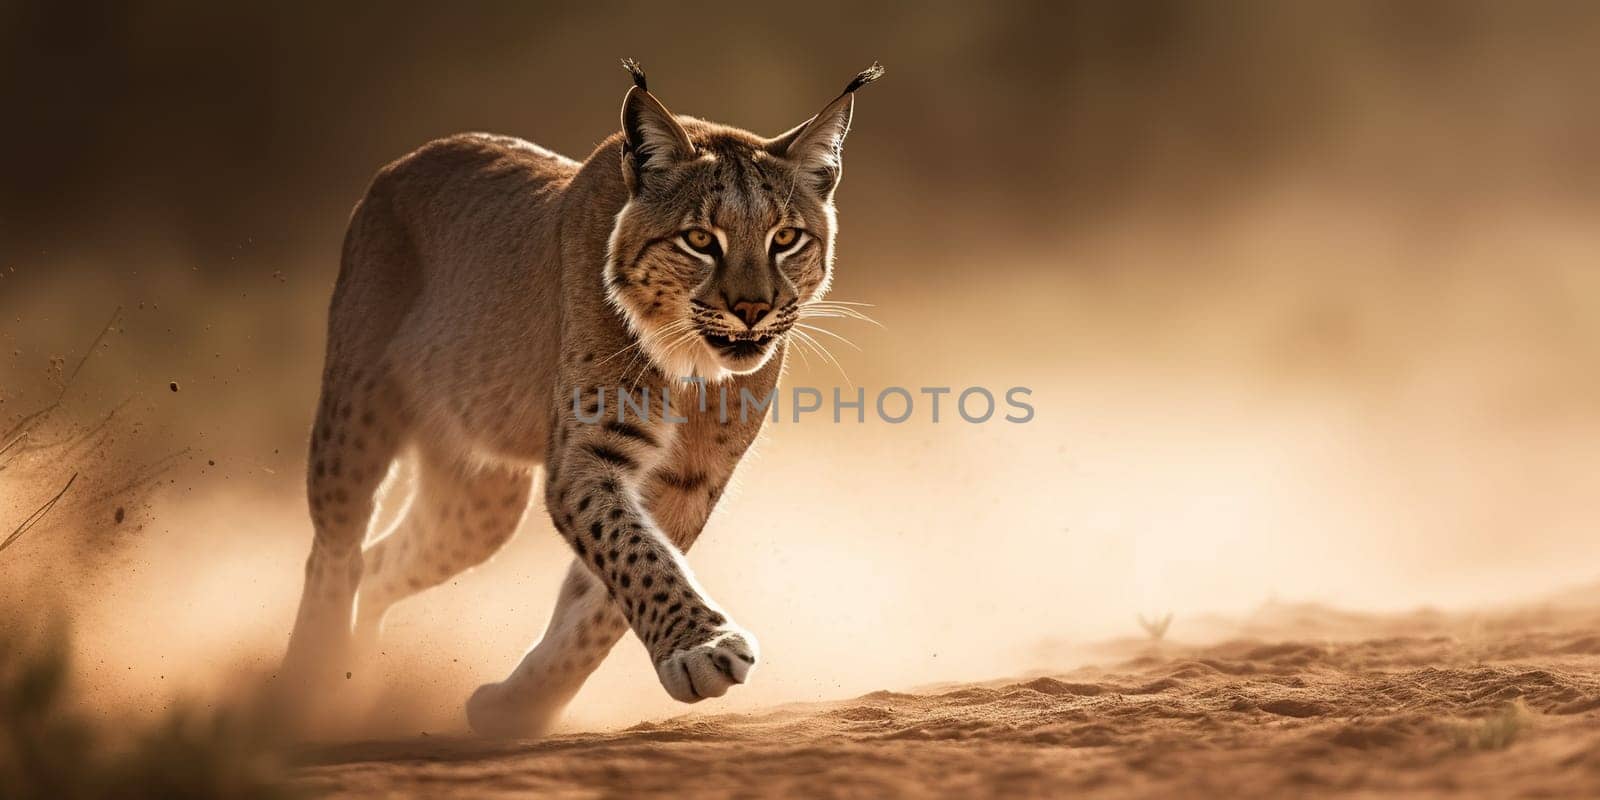 Lynx running through the steppe by tan4ikk1